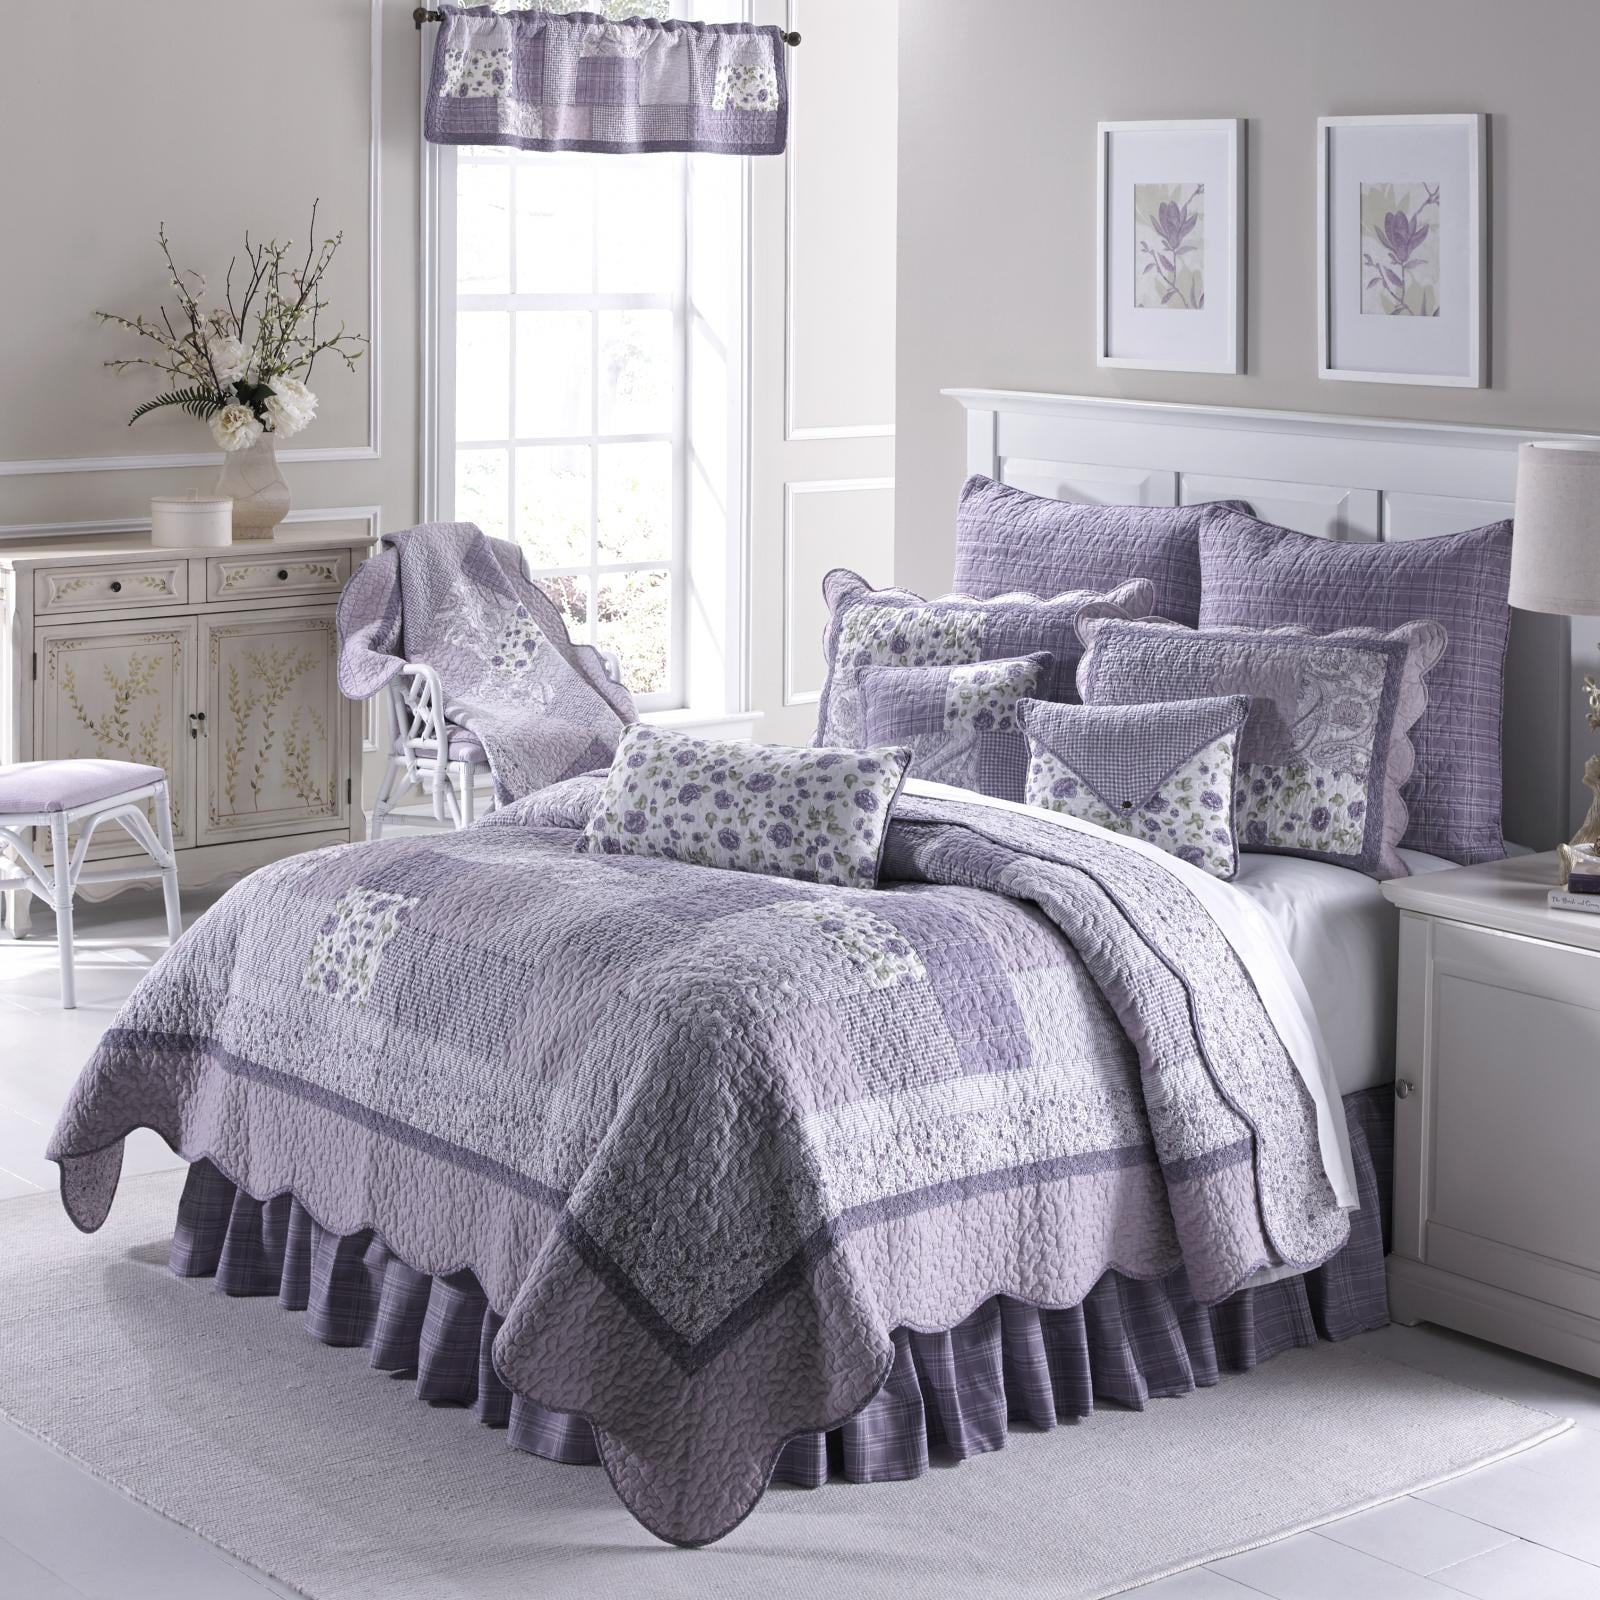  Donna Sharp Throw Blanket - Lavender Rose Cotton Contemporary  Decorative Throw Blanket with Patchwork Pattern : Home & Kitchen